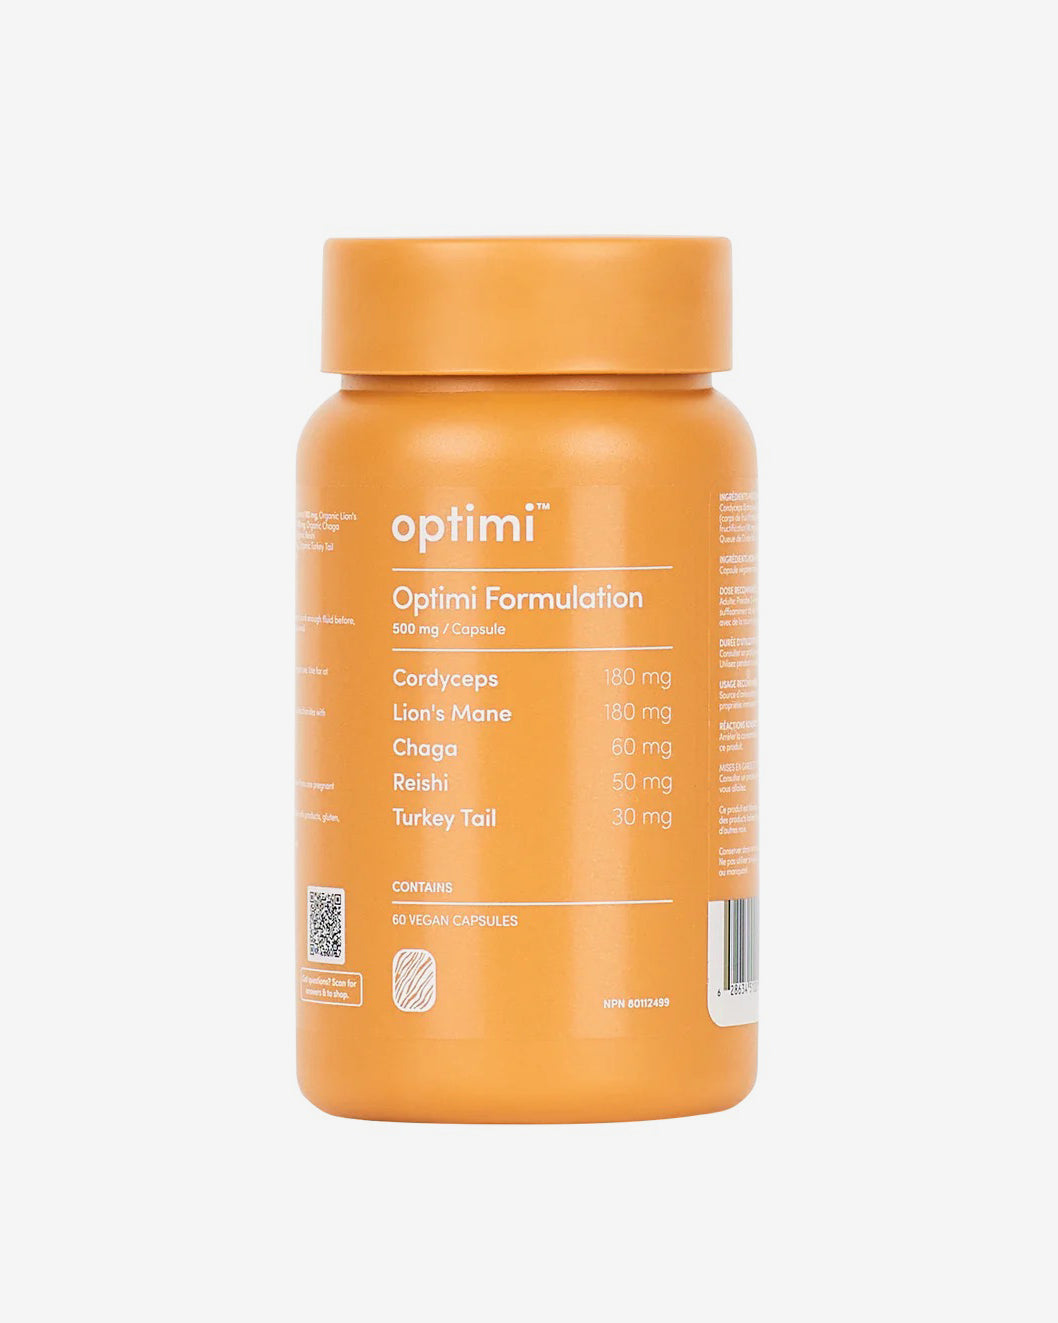 Optimi Formulation Organic Mushroom Supplement